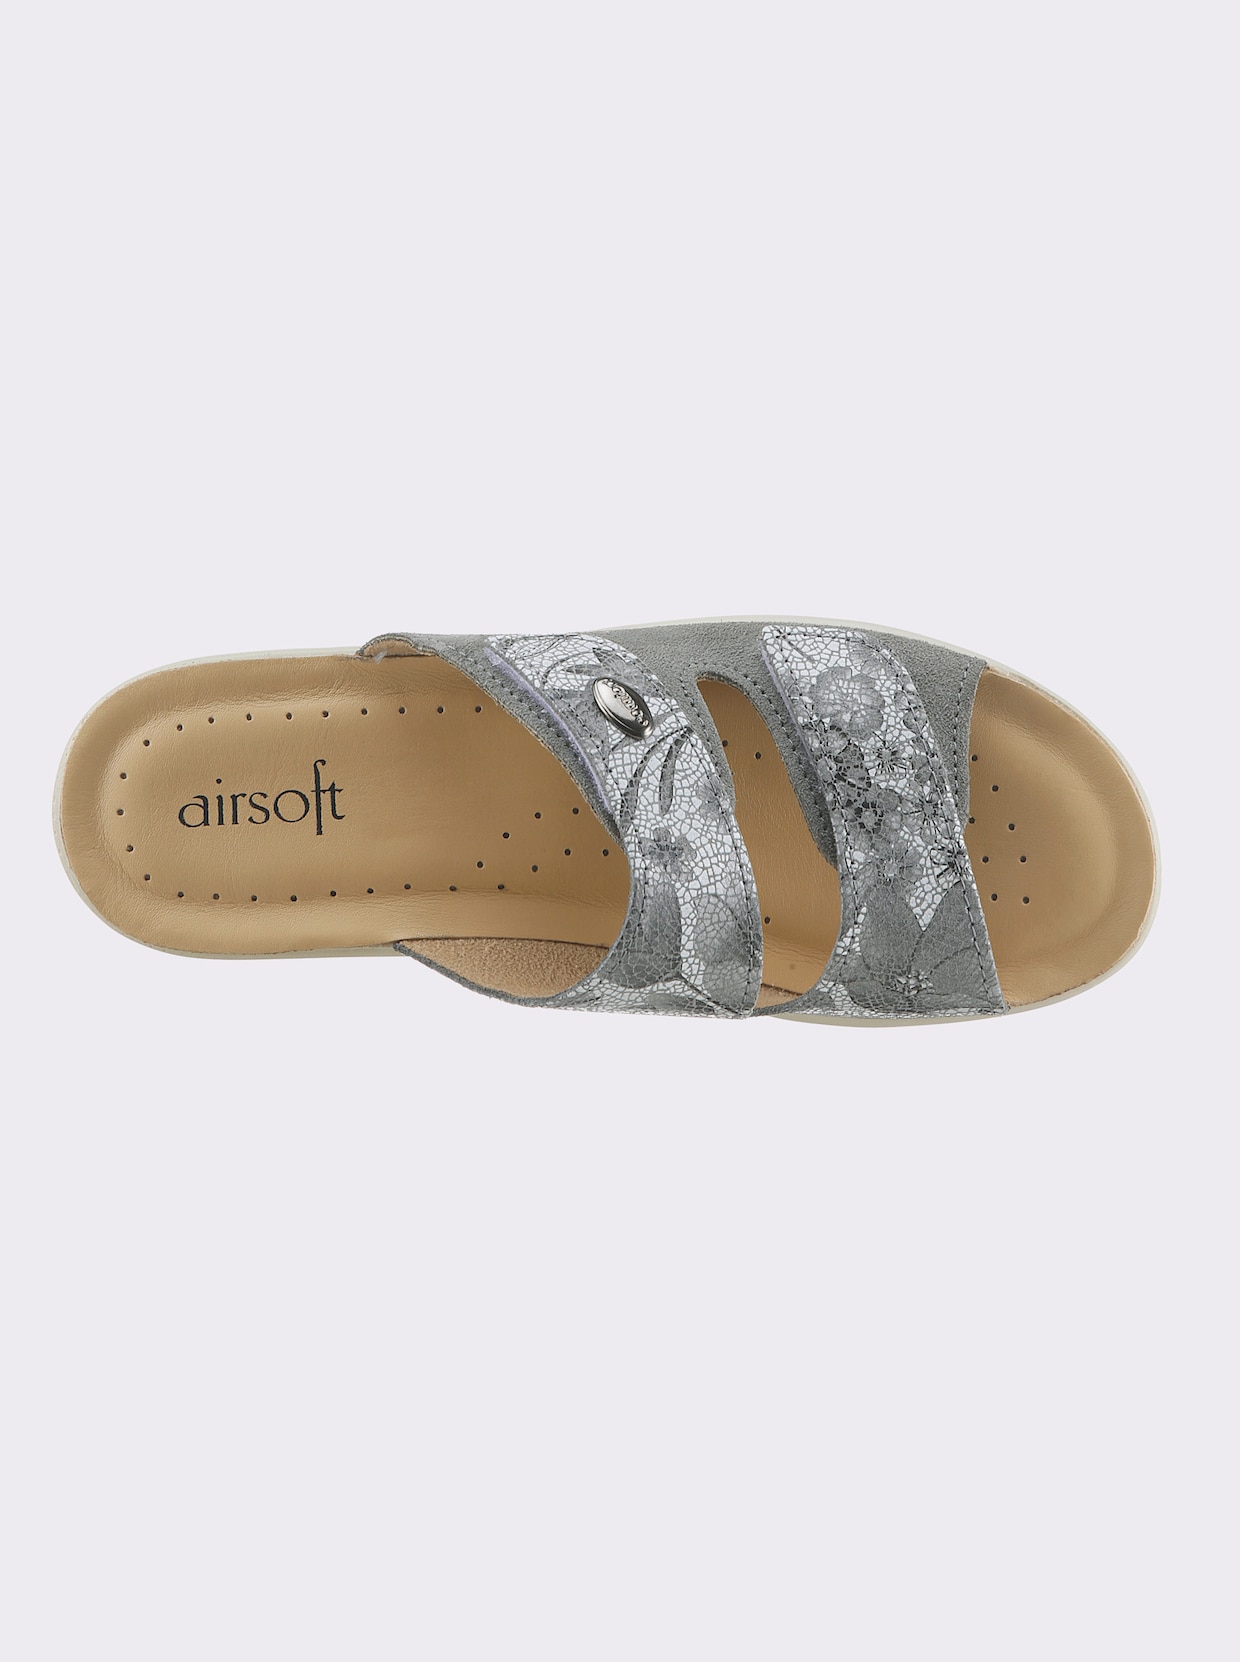 airsoft comfort+ Pantolette - grau-geblümt